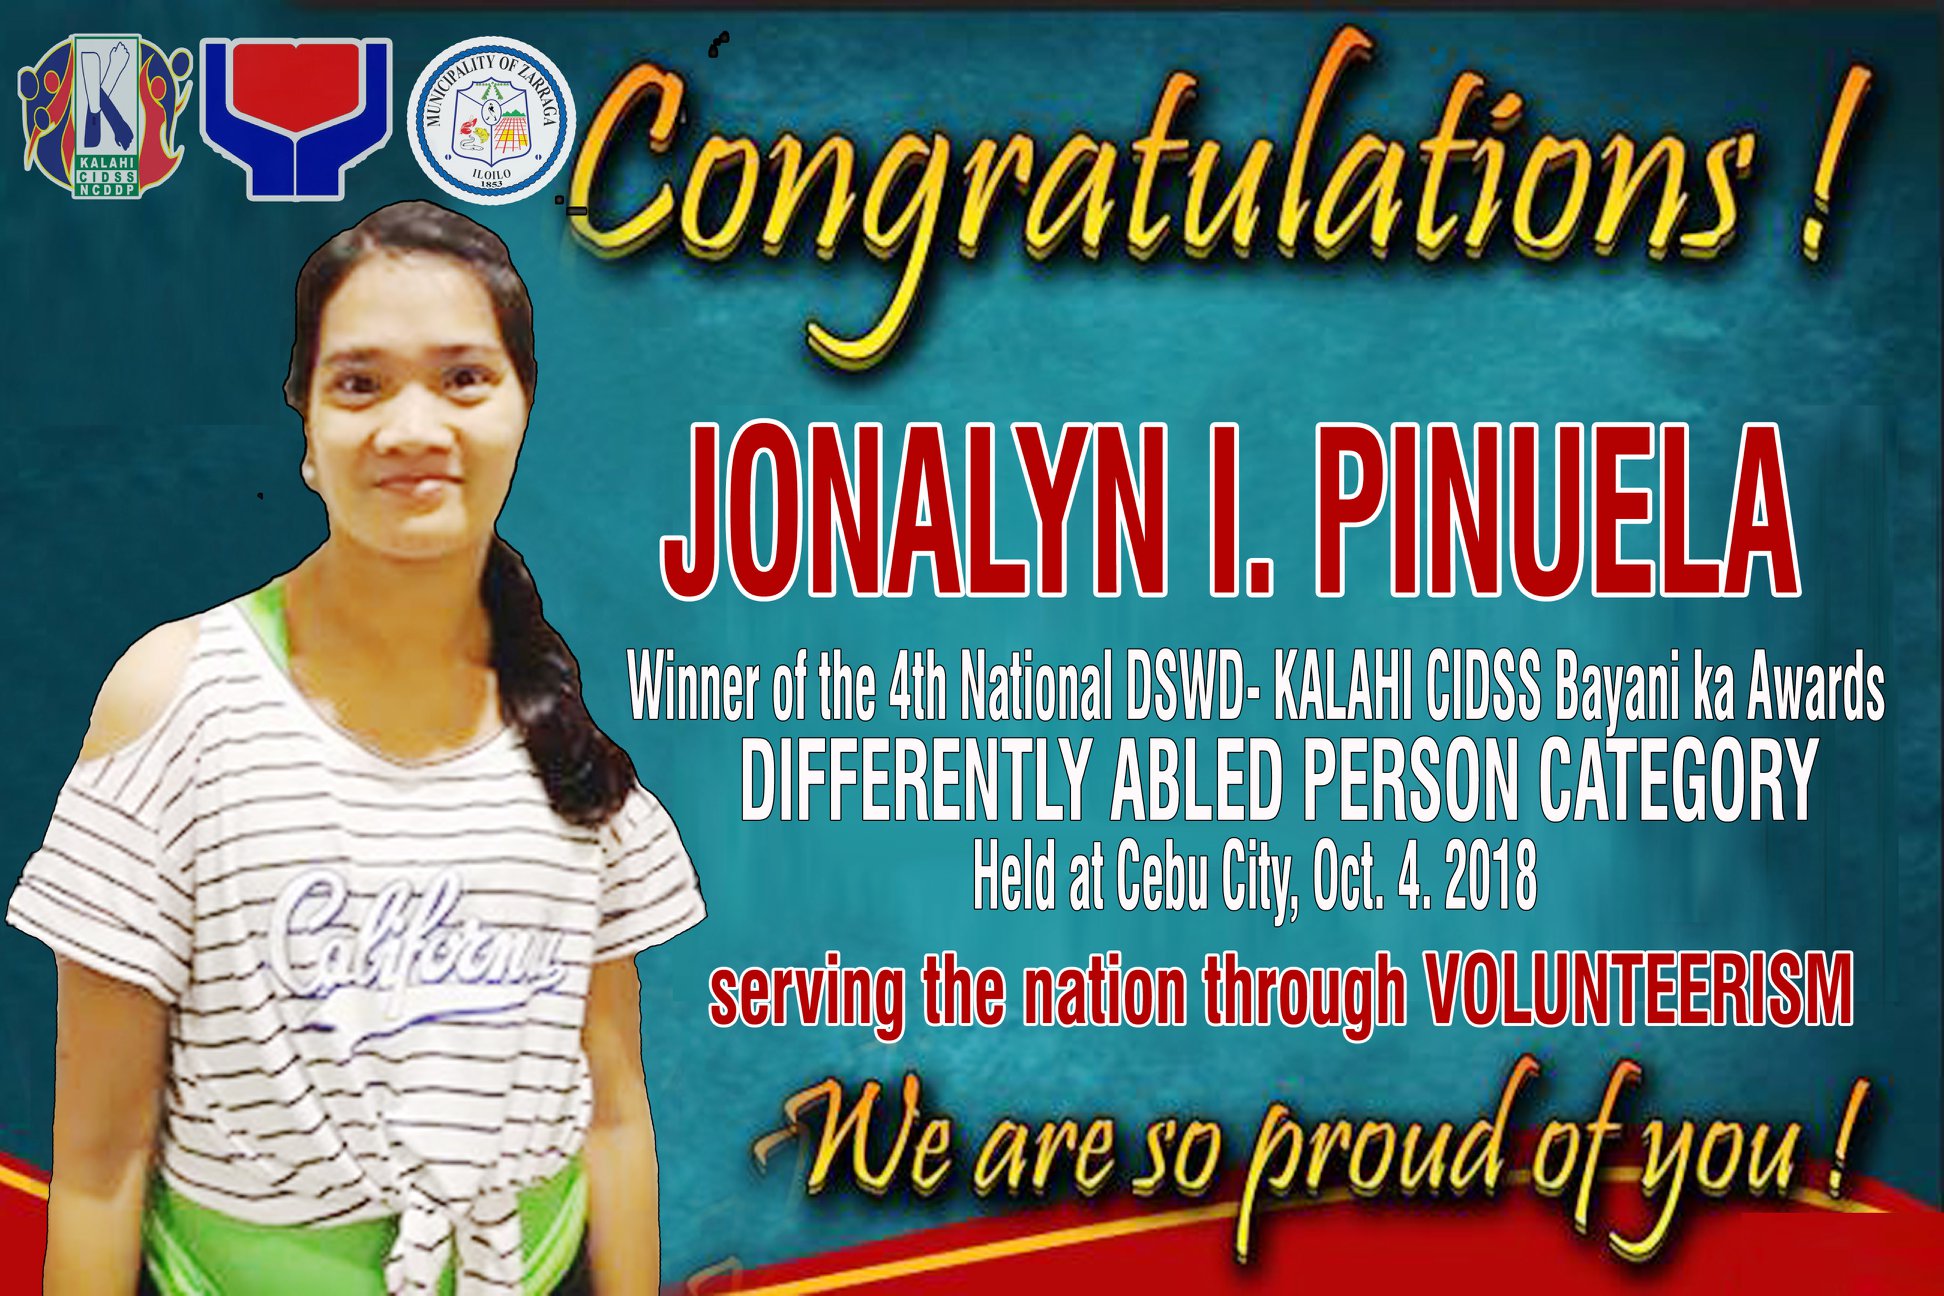 Ms. Jonalyn I. Pinuela, winner of the 4th National DSWD KALAHI- CIDSS Bayani Ka Awards